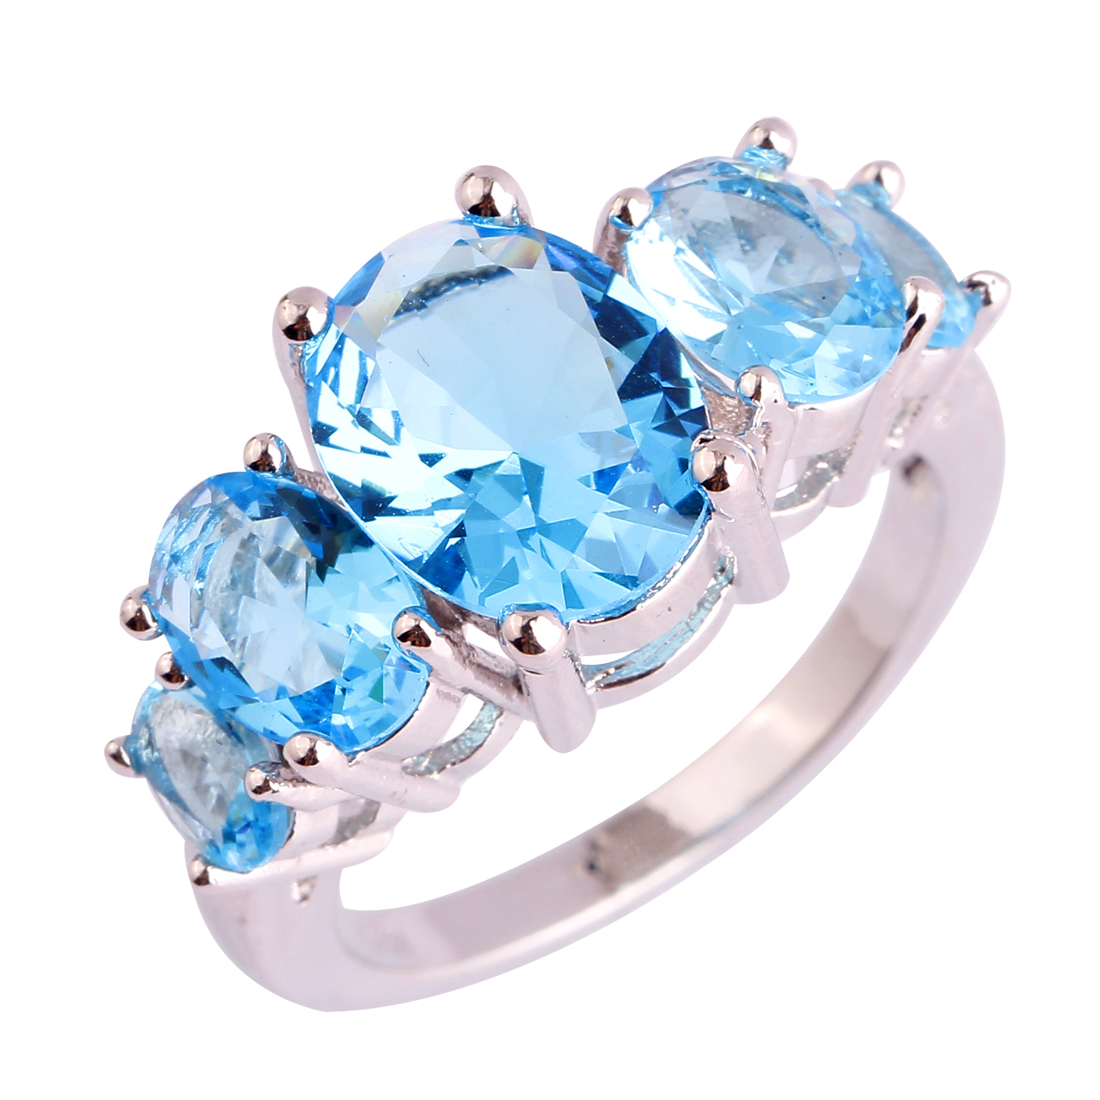 New Art Deco Fashion Jewelry Blue Topaz 925 Silver Ring Size 6 7 8 9 10